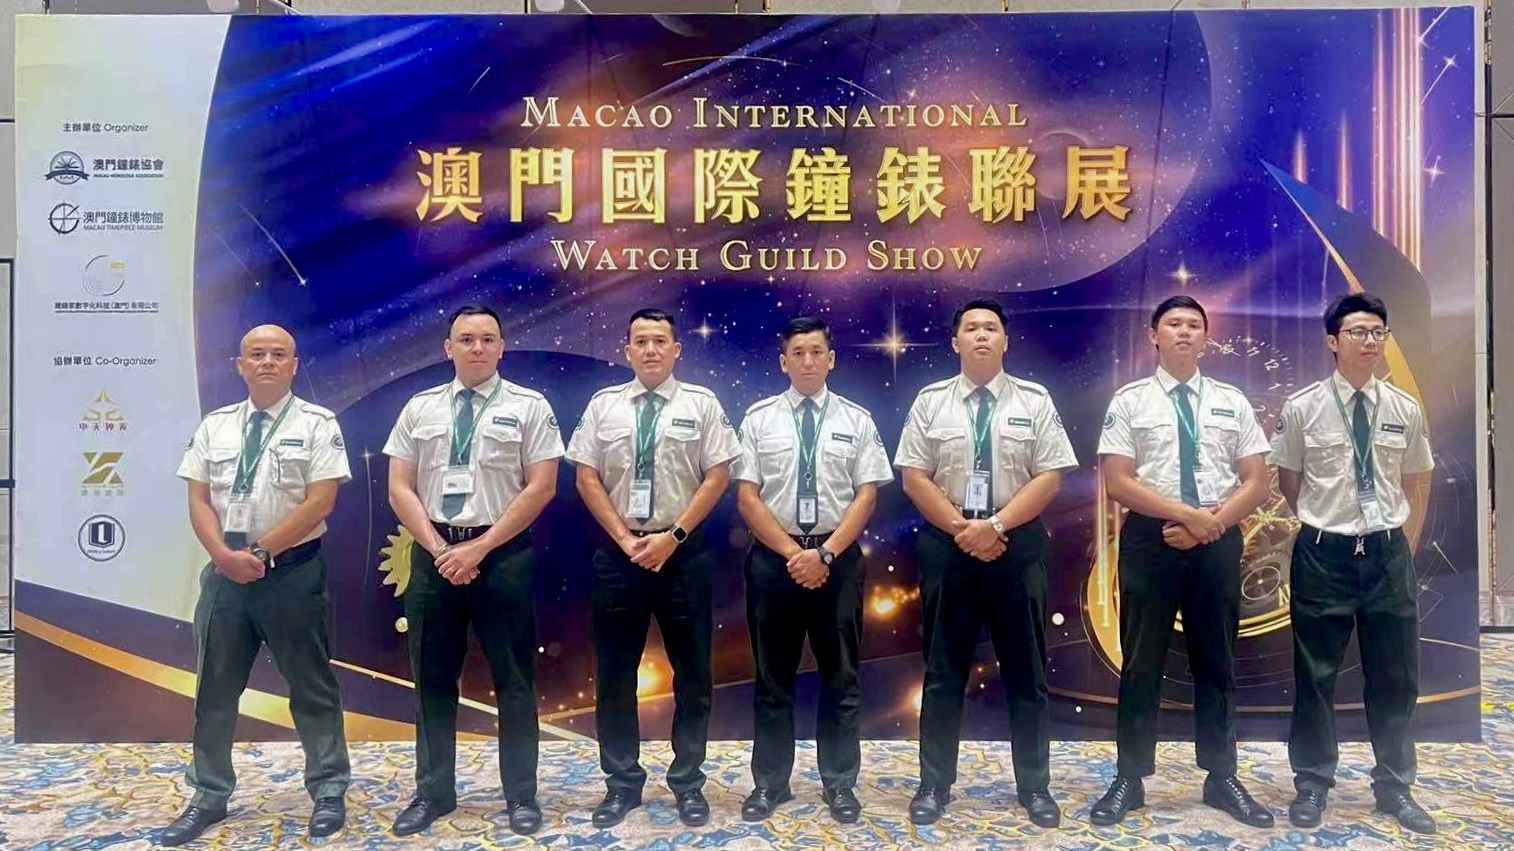 Macao International Watch Guild Show - Security Team